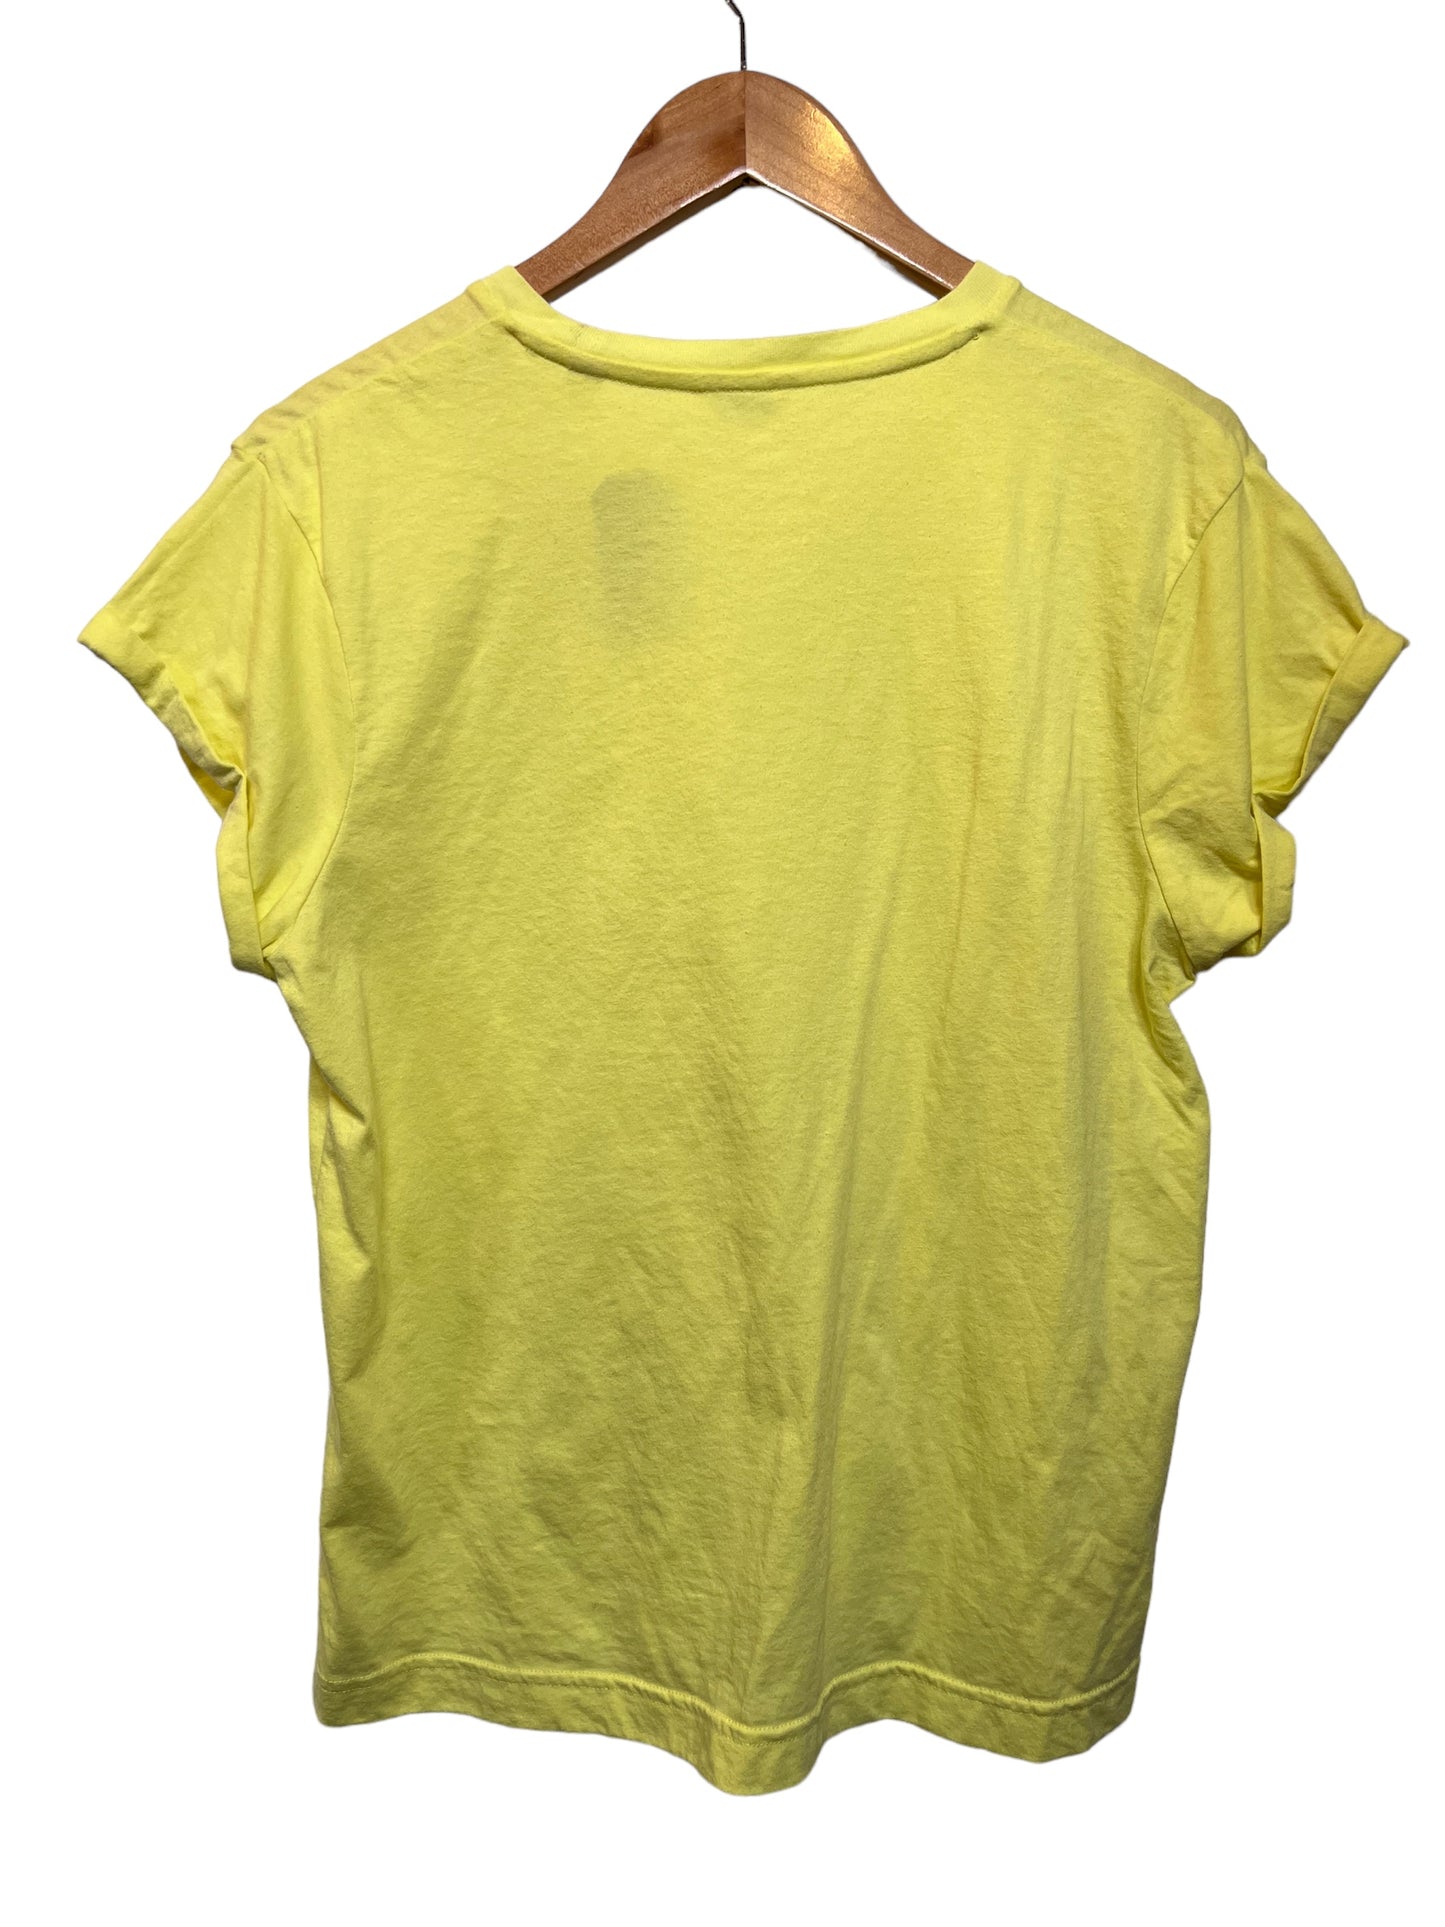 Jack Wills Women’s Yellow Top (Size M)